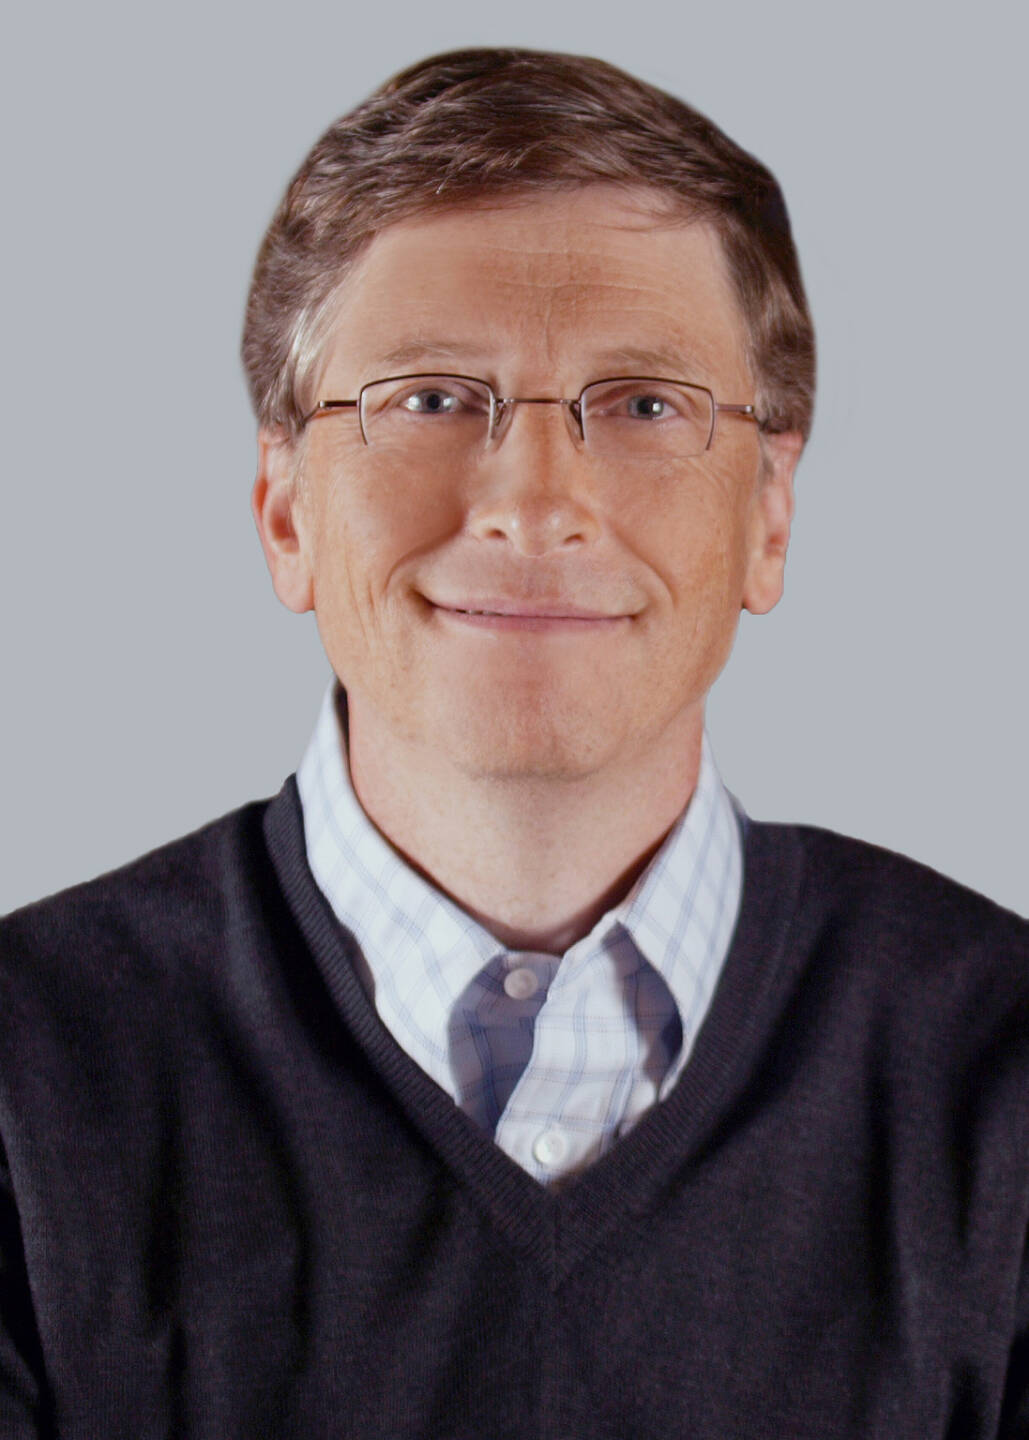 Bill Gates, Founder and Technology Advisor Microsoft Corp.